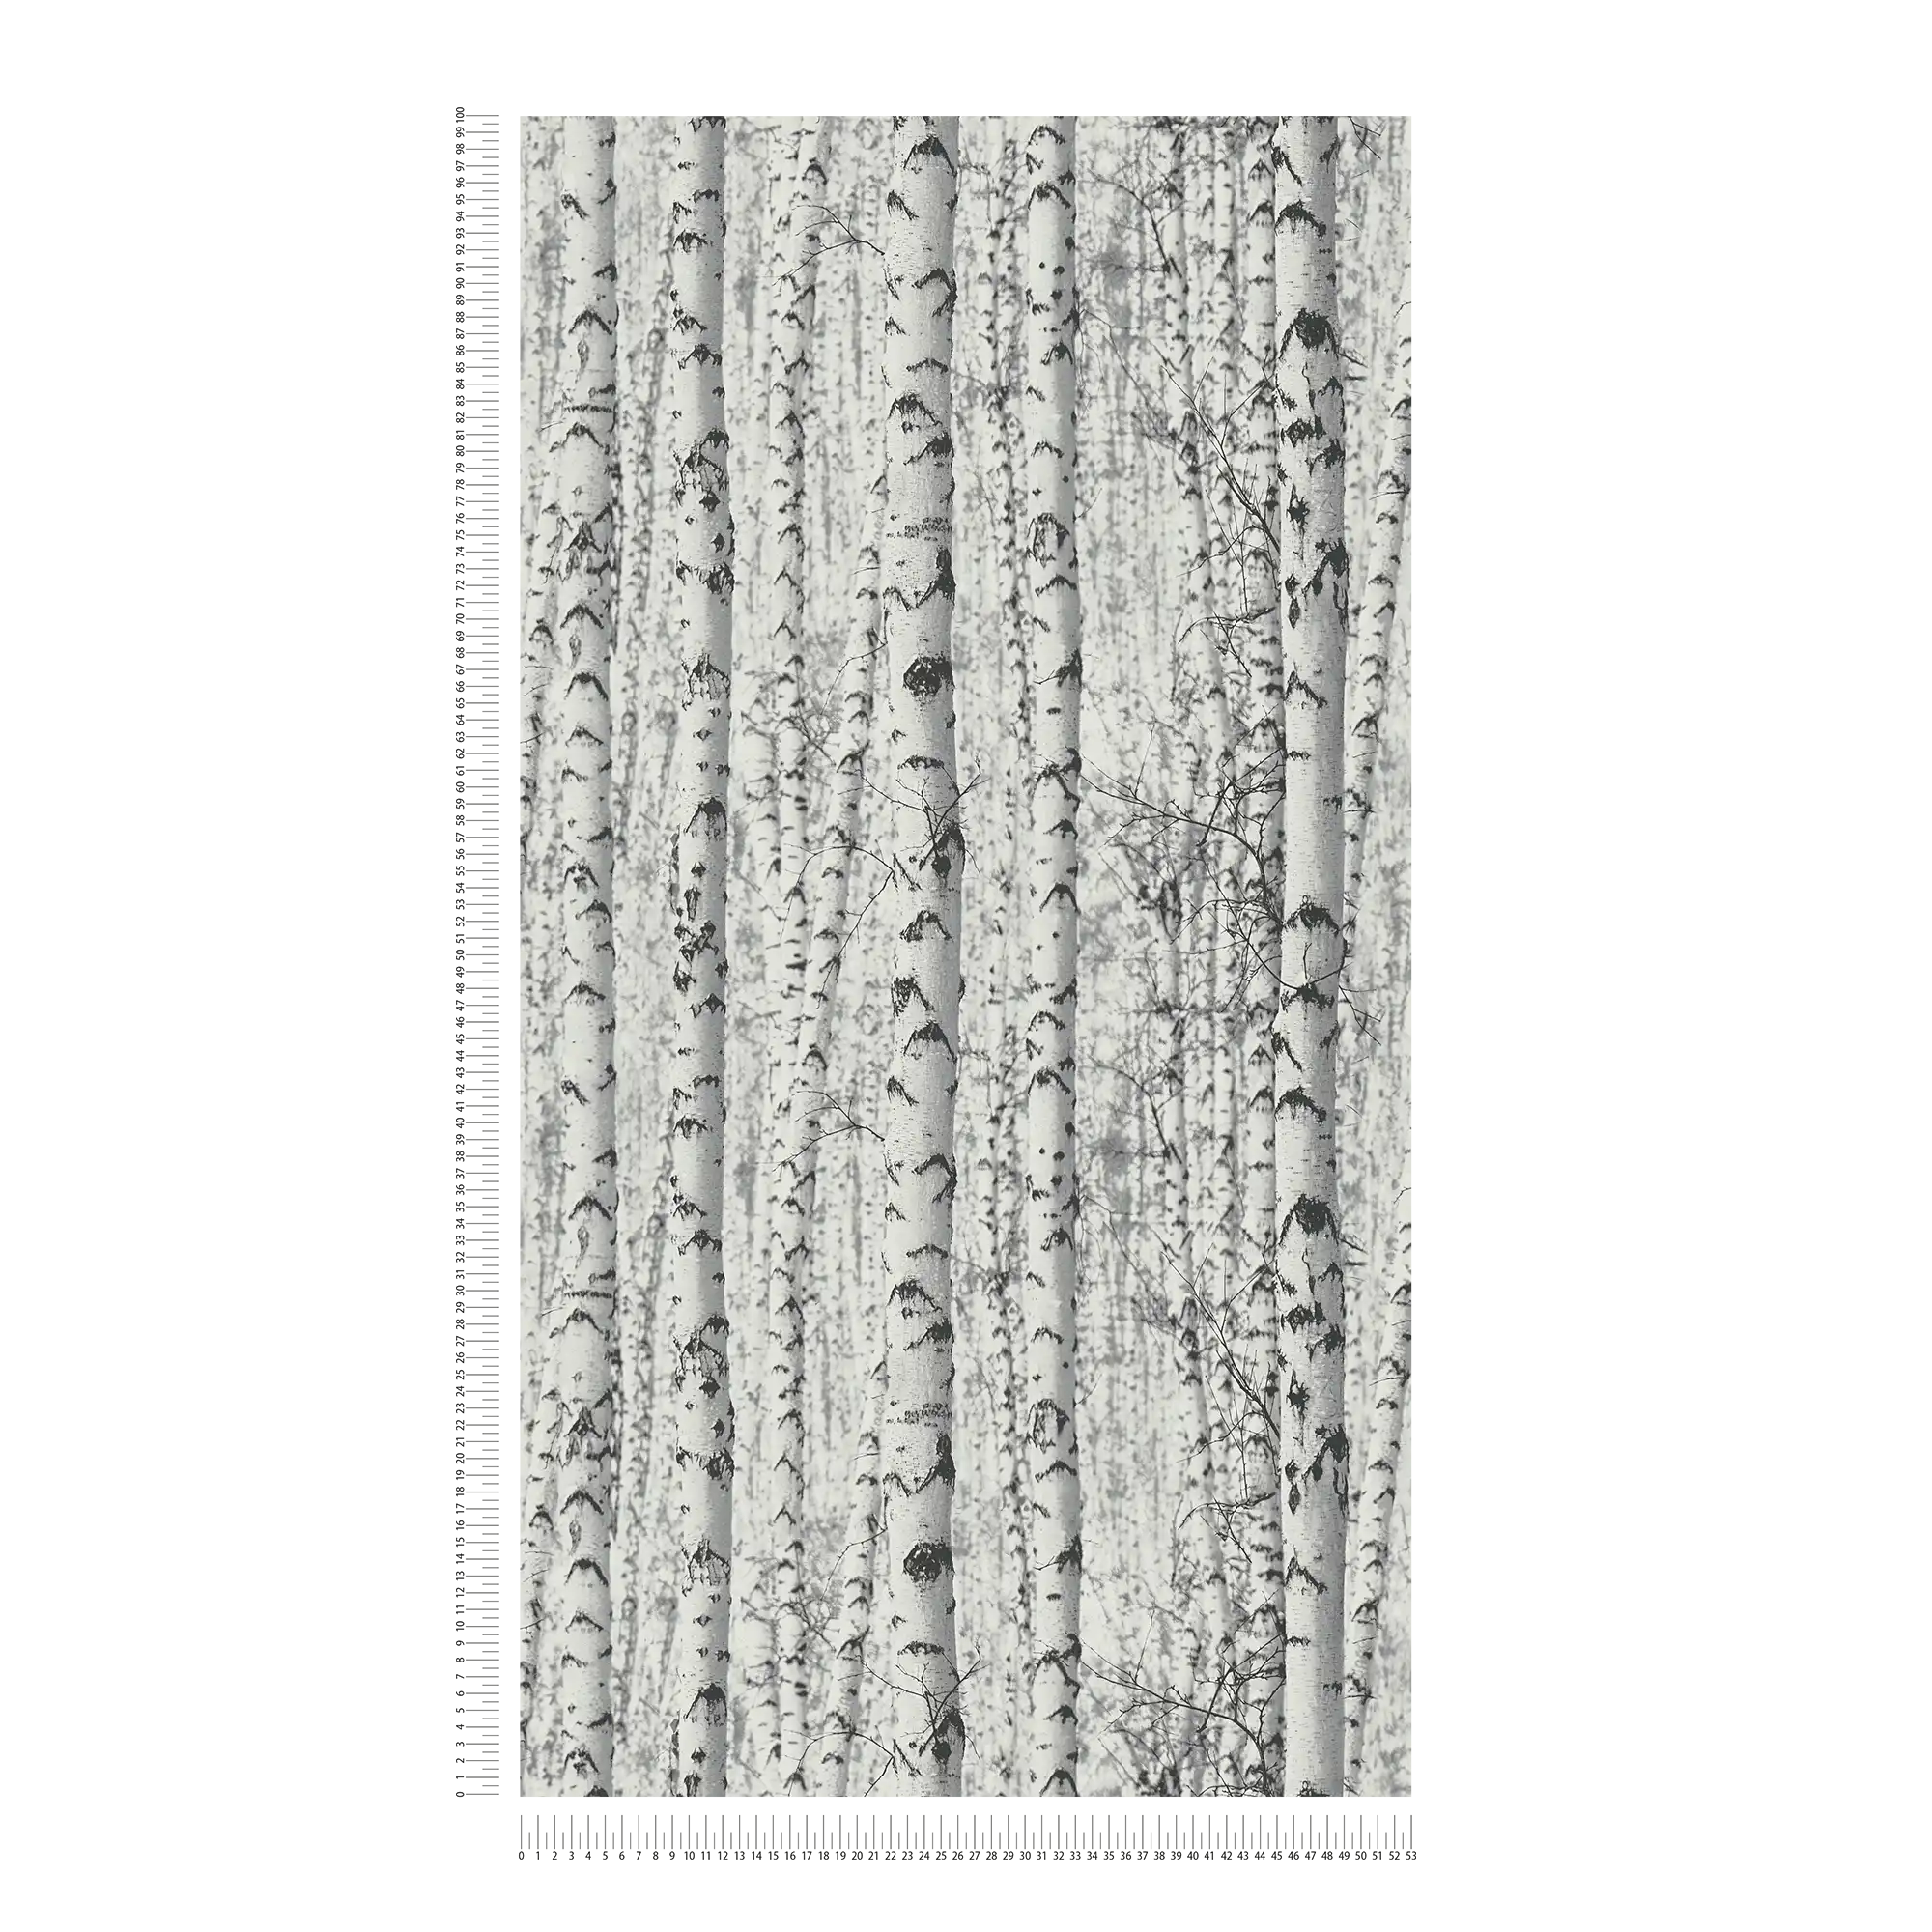             Black and white wallpaper birch forest 3D - white, black
        